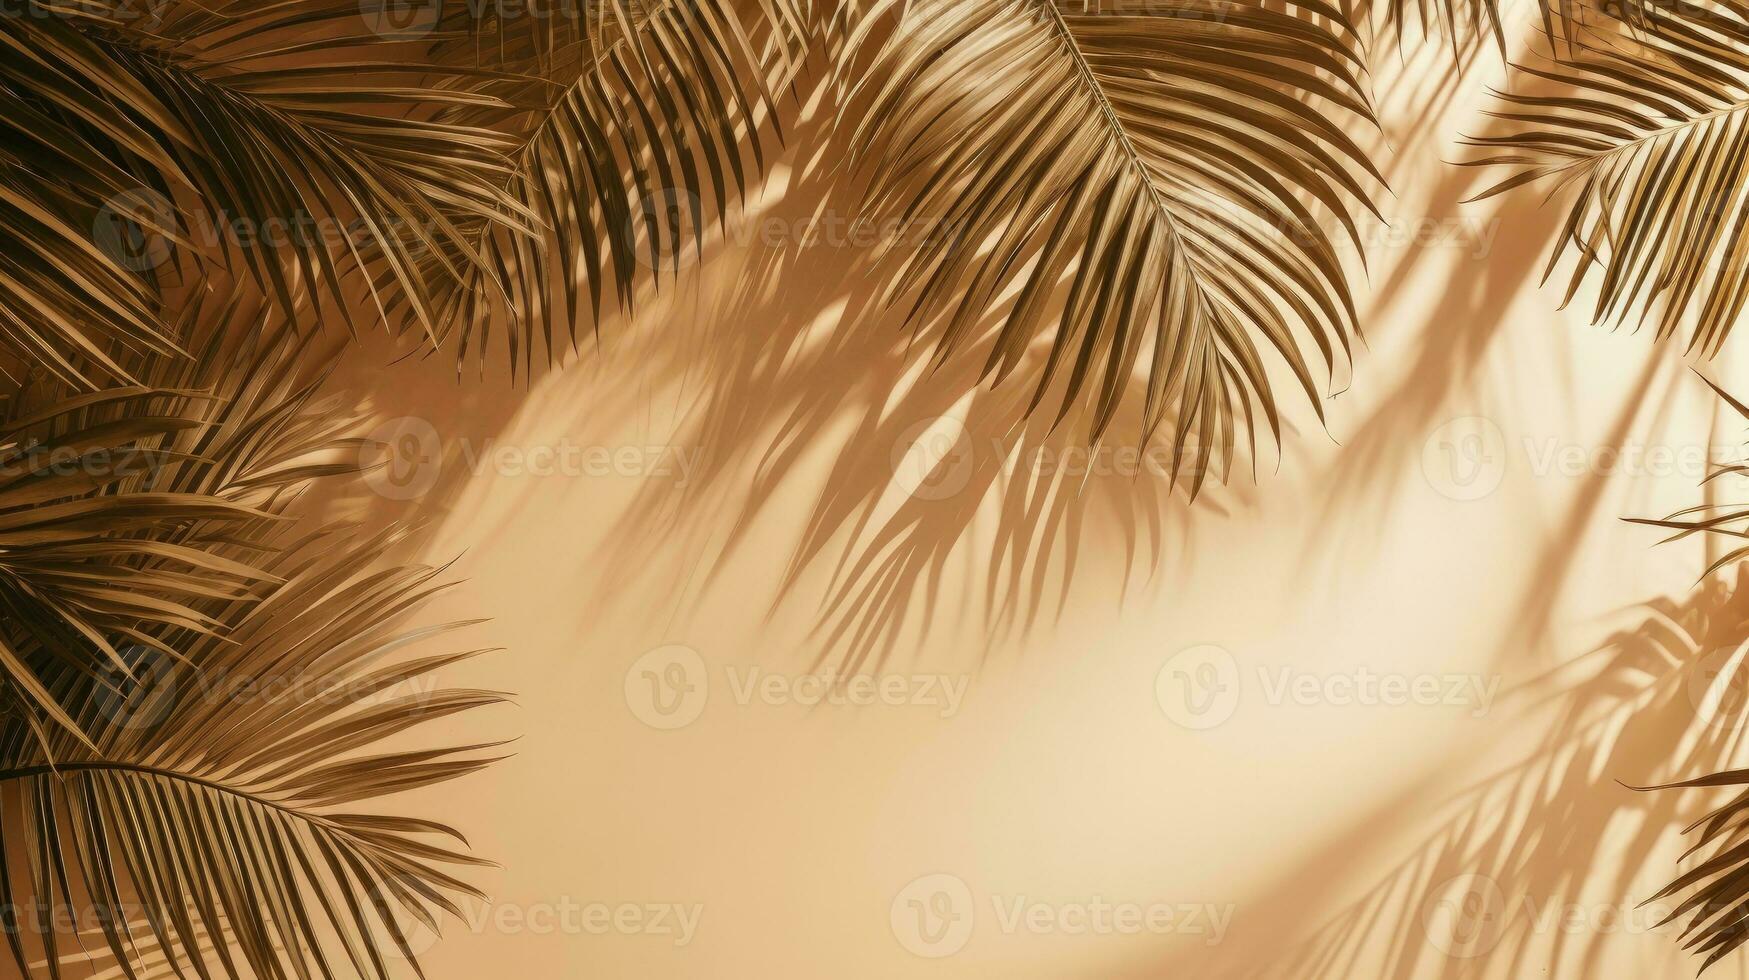 palm boom bladeren gieten schaduwen Aan eco vriendelijk karton. silhouet concept foto